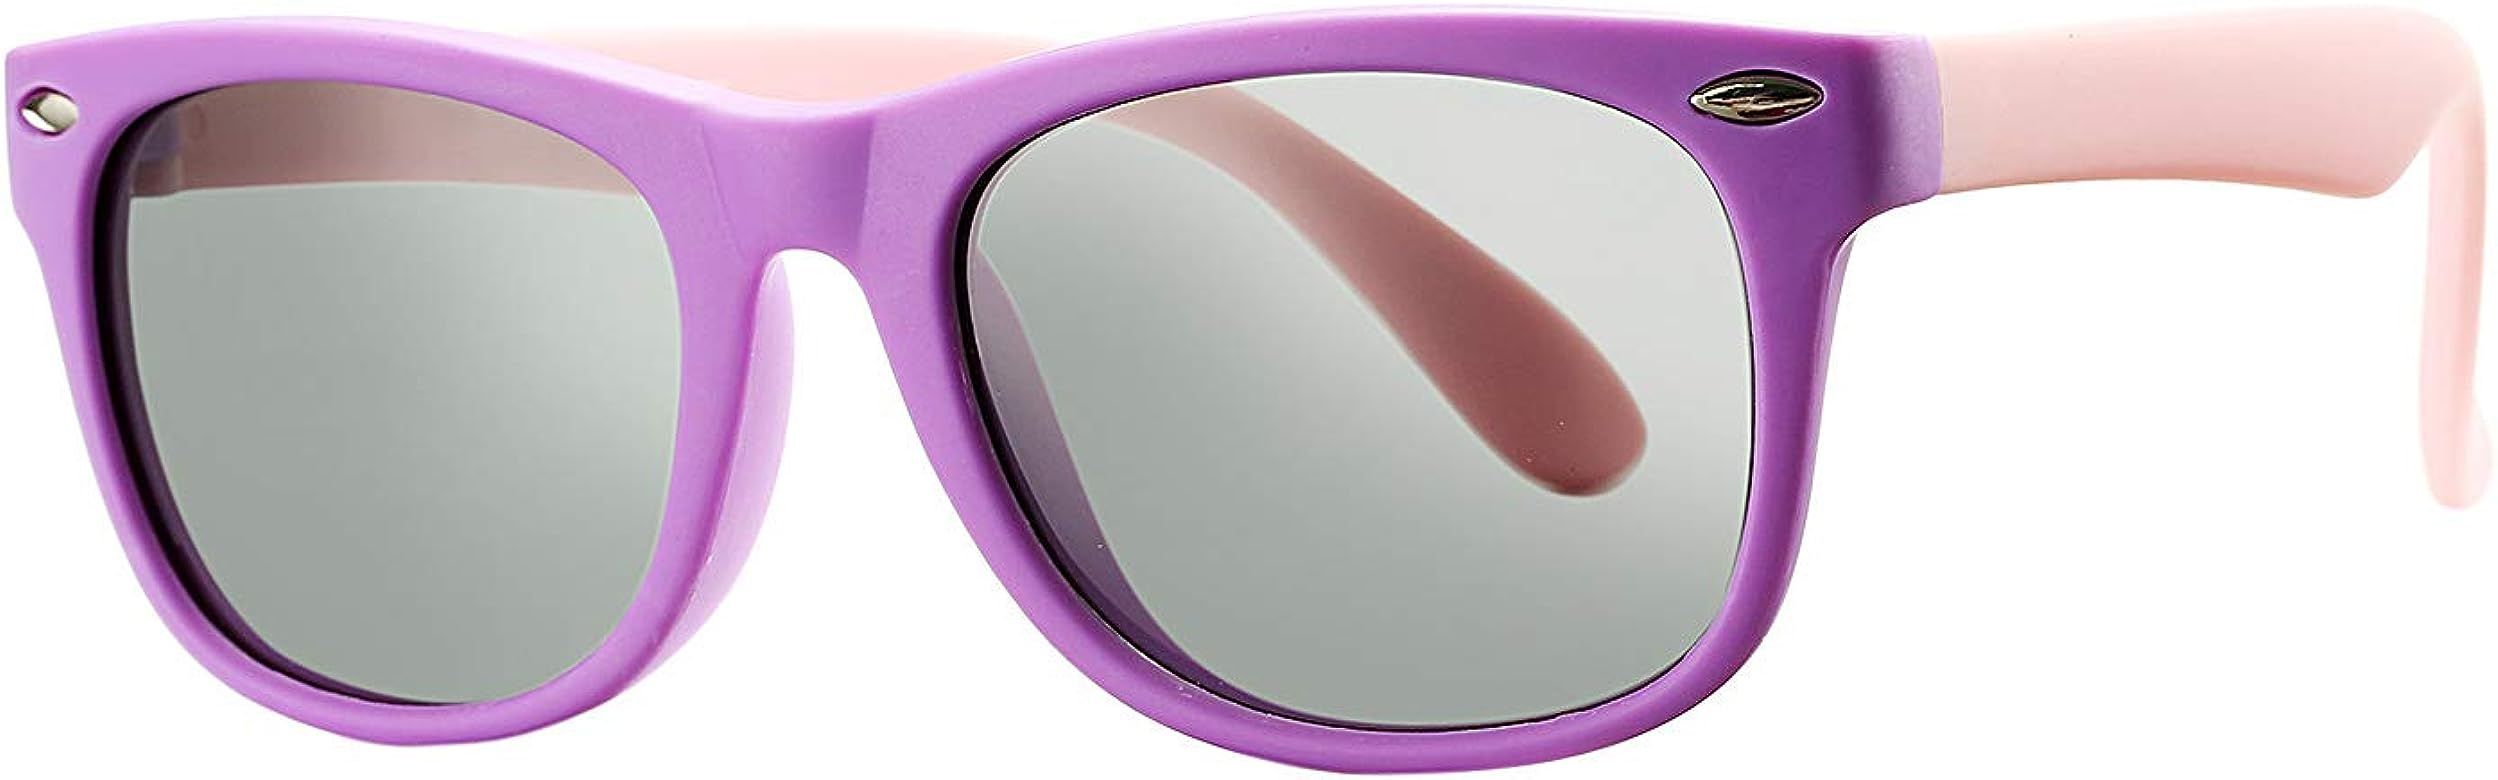 Pro Acme TPEE Rubber Flexible Kids Polarized Sunglasses Age 3-10 | Amazon (US)